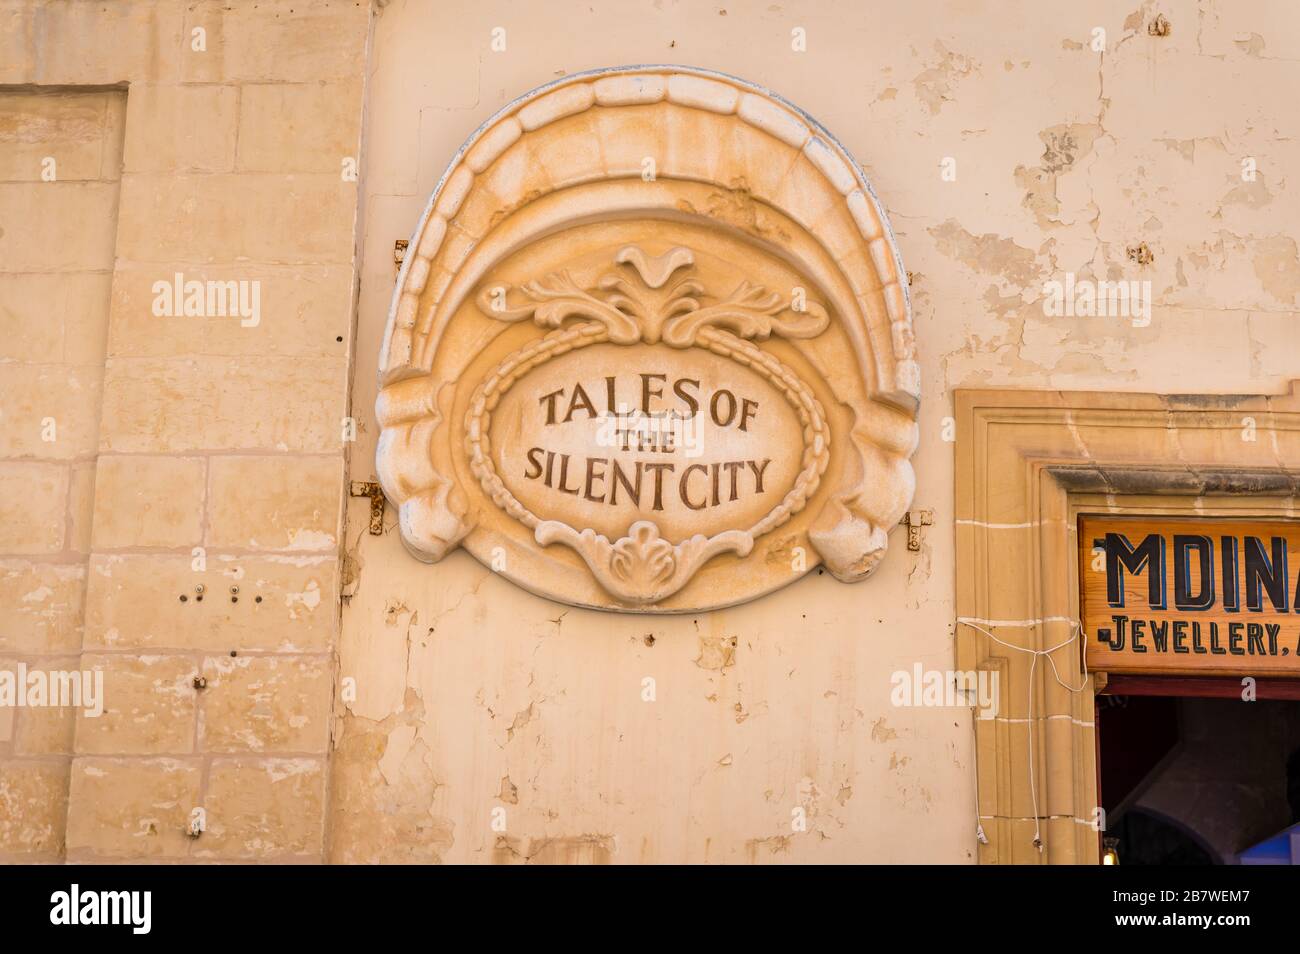 Tales of the Silent City sign, Mdina, Malta Stock Photo